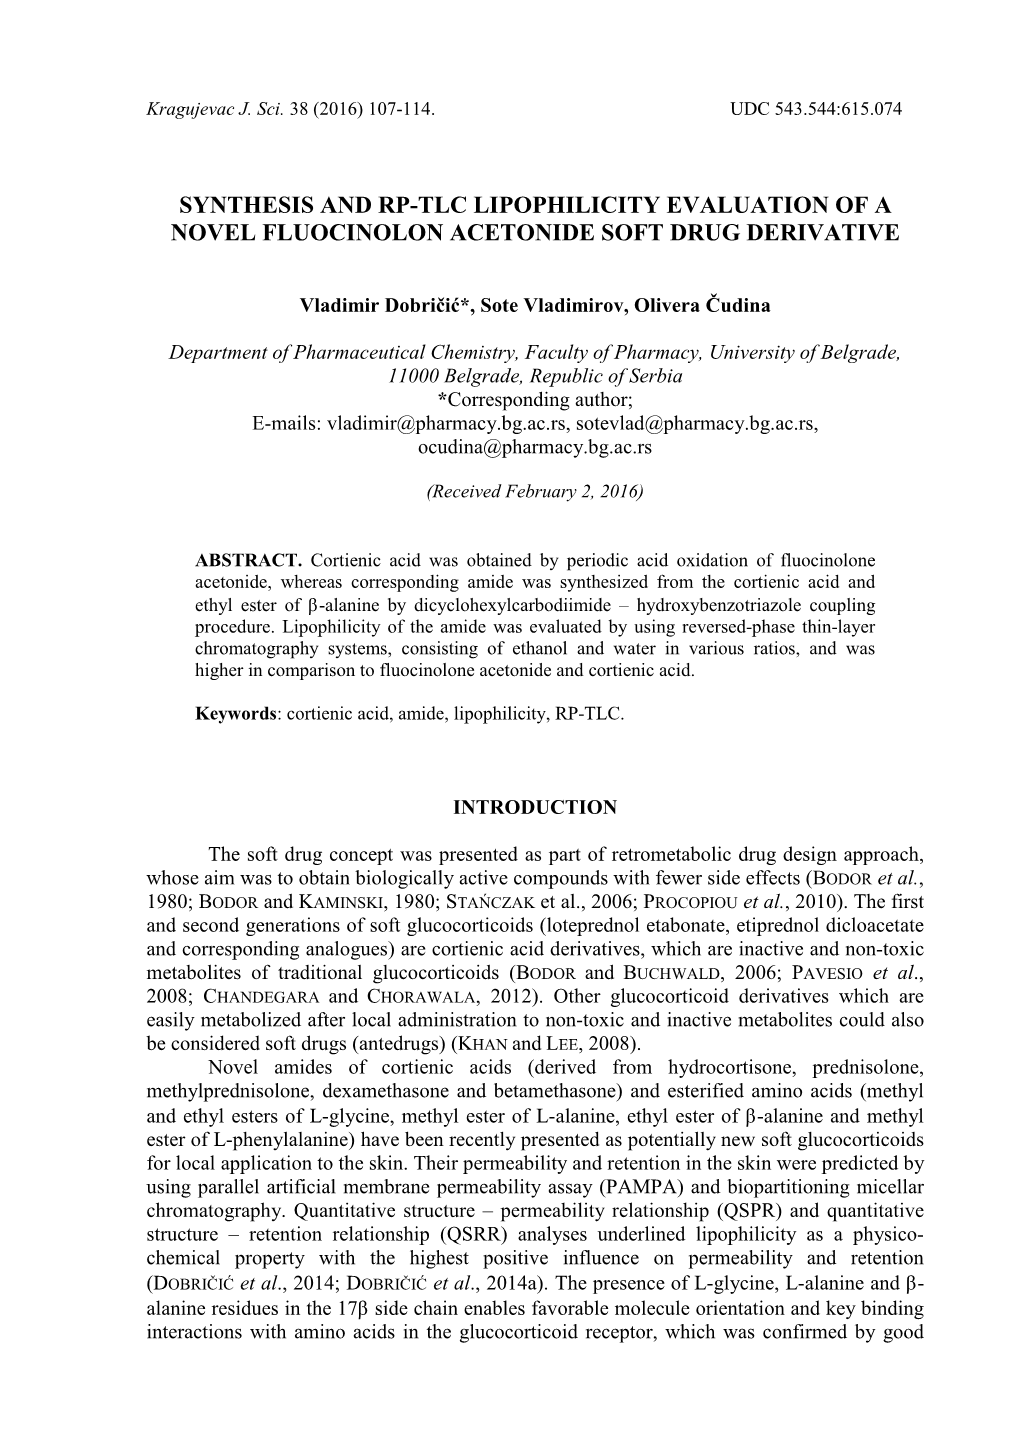 Synthesis and Rp-Tlc Lipophilicity Evaluation of a Novel Fluocinolon Acetonide Soft Drug Derivative